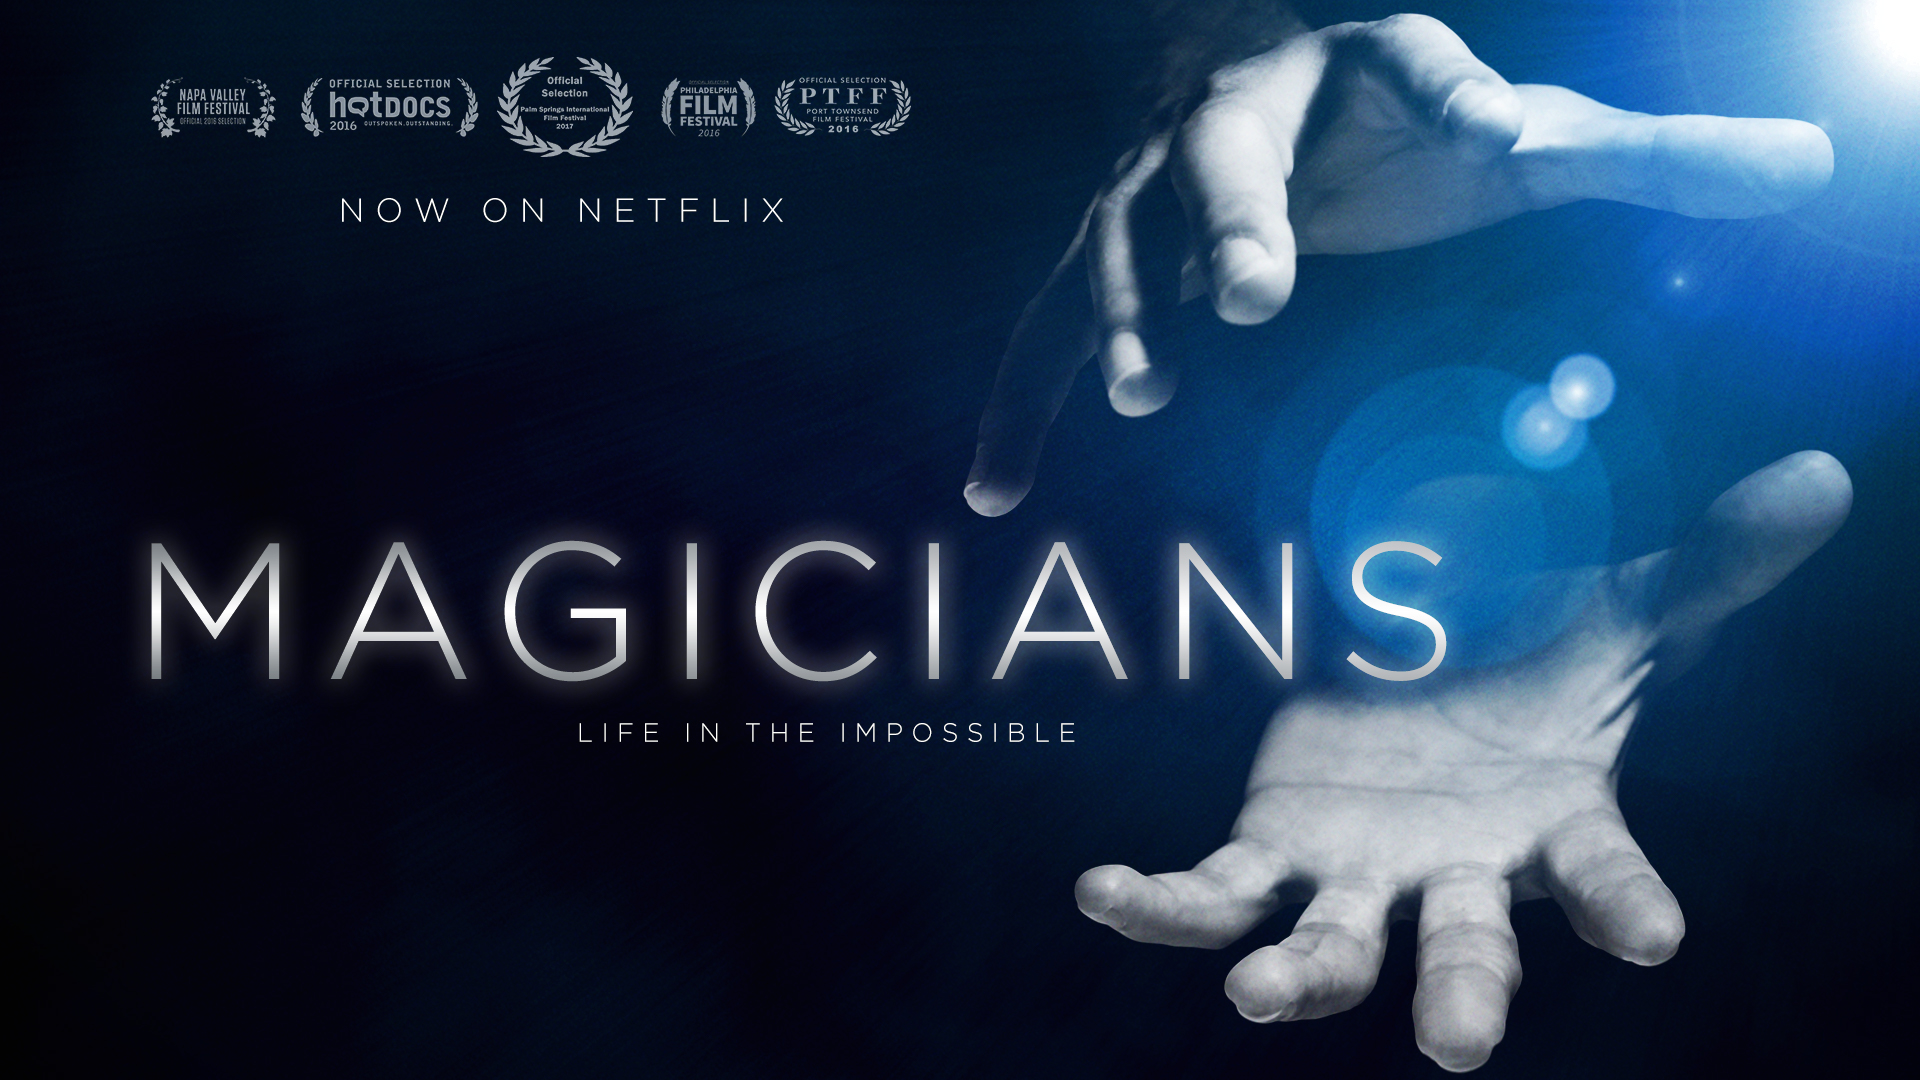 Star of Netflix Documentary On Magic